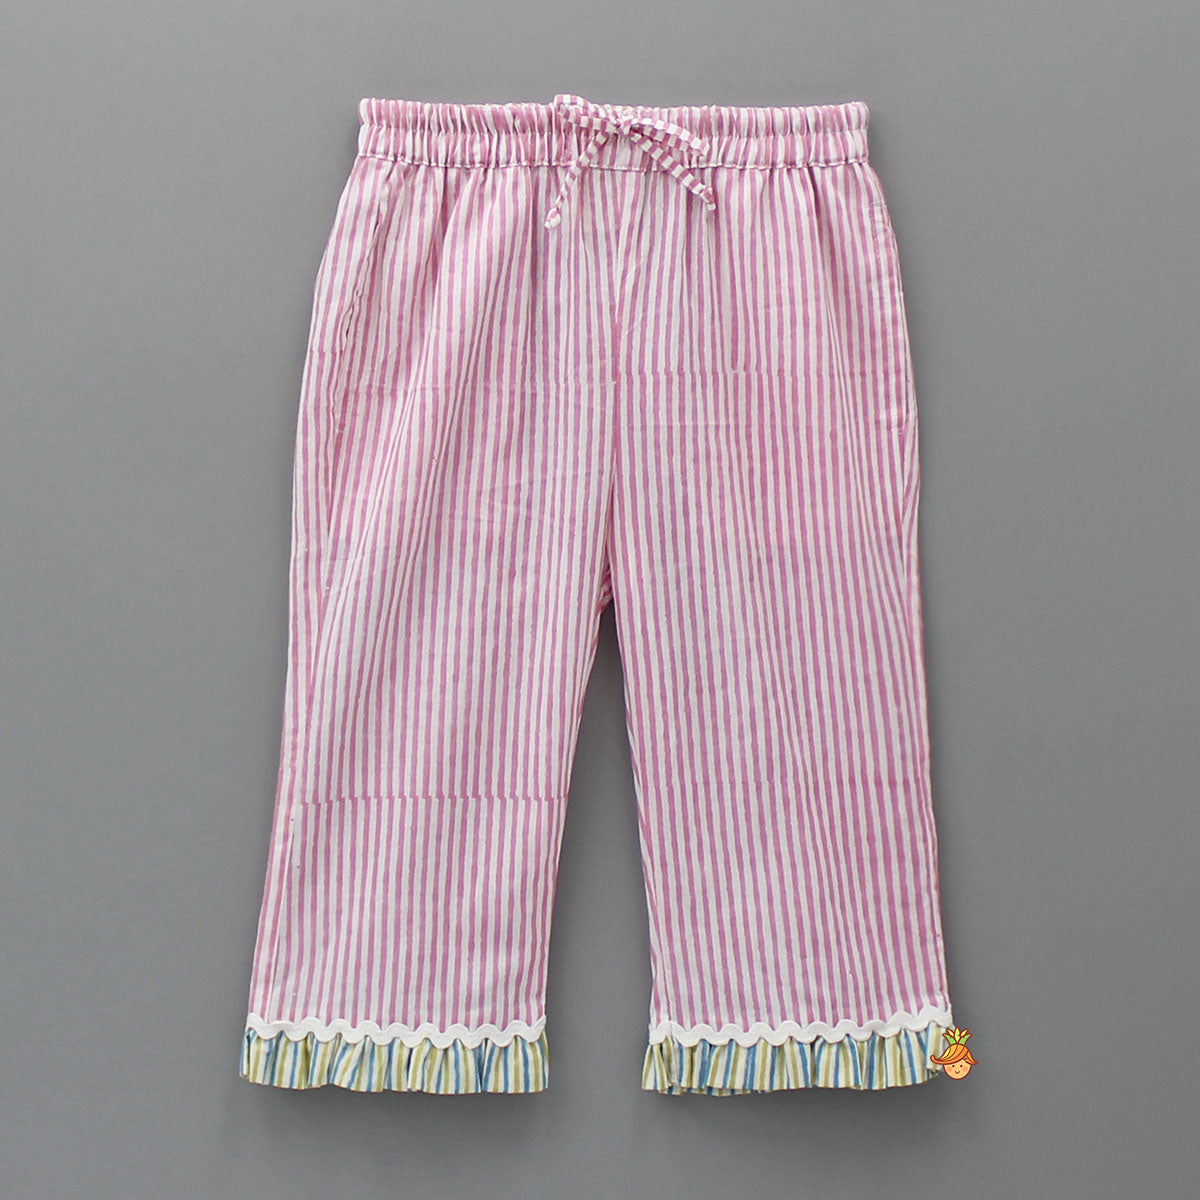 Pre Order: Notch Collar Stripe Printed Top And Pyjama